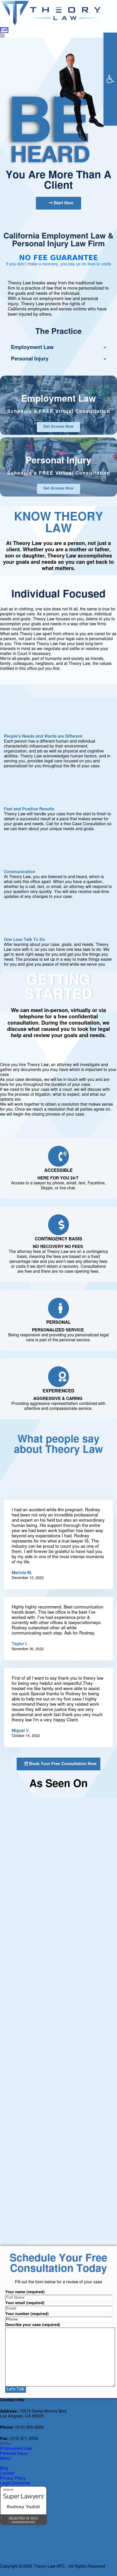 Theory Law APC - Los Angeles CA Lawyers